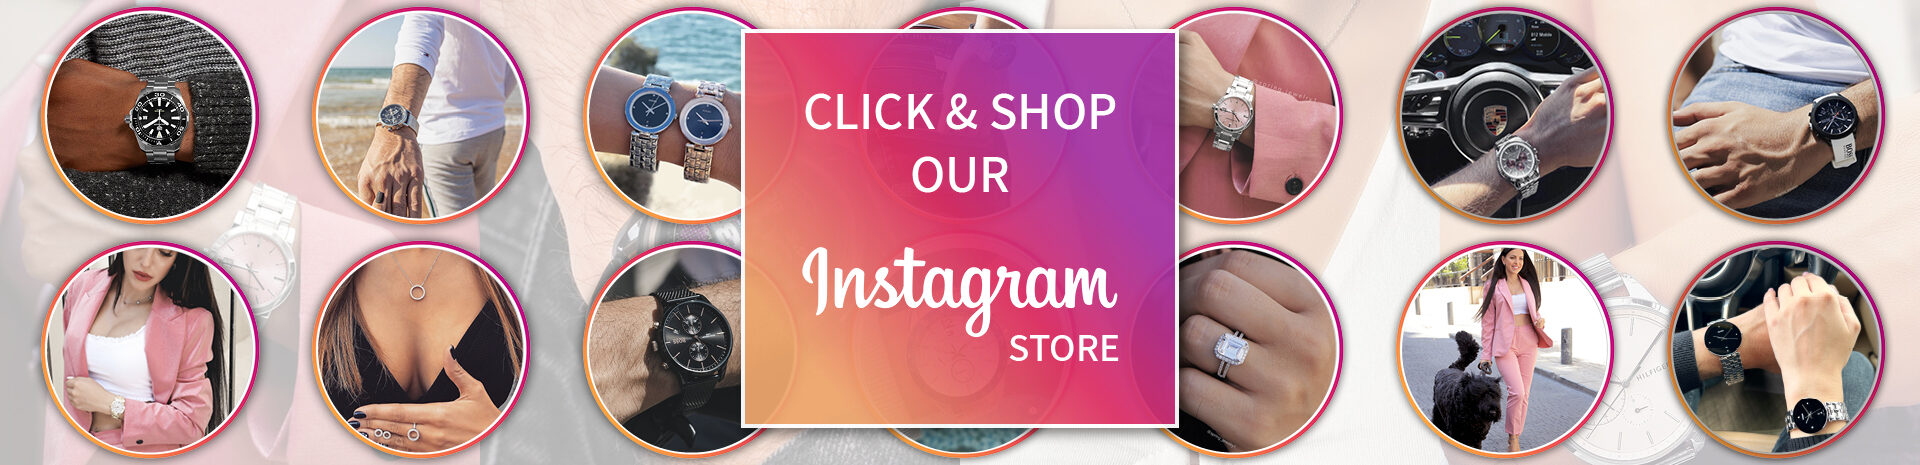 shop our instagram banner באנר אינסטגרם 2